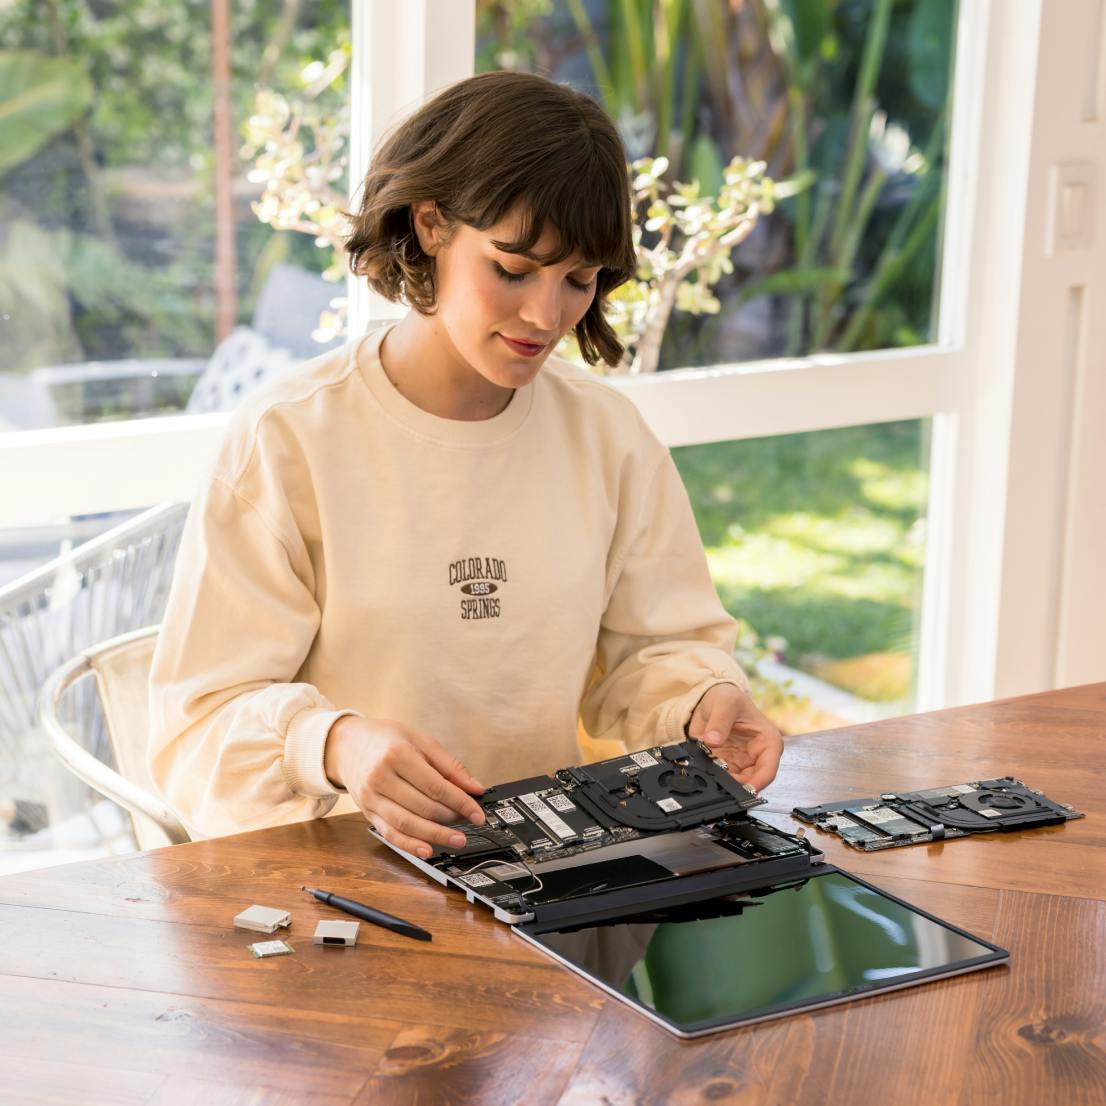 A woman assembling a Framework Laptop on a table